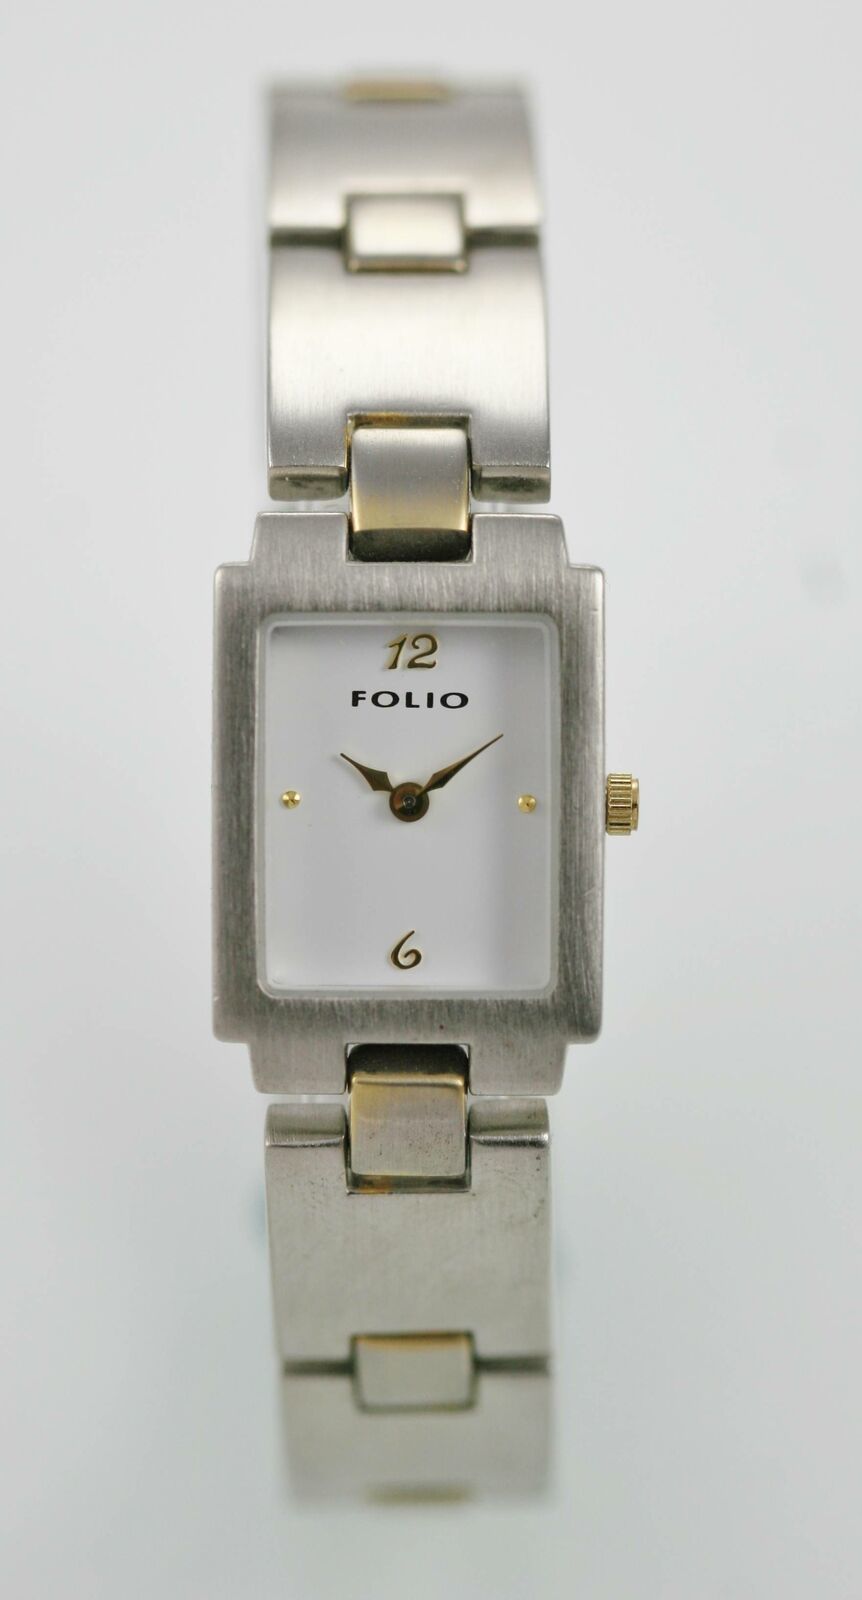 folio watch production